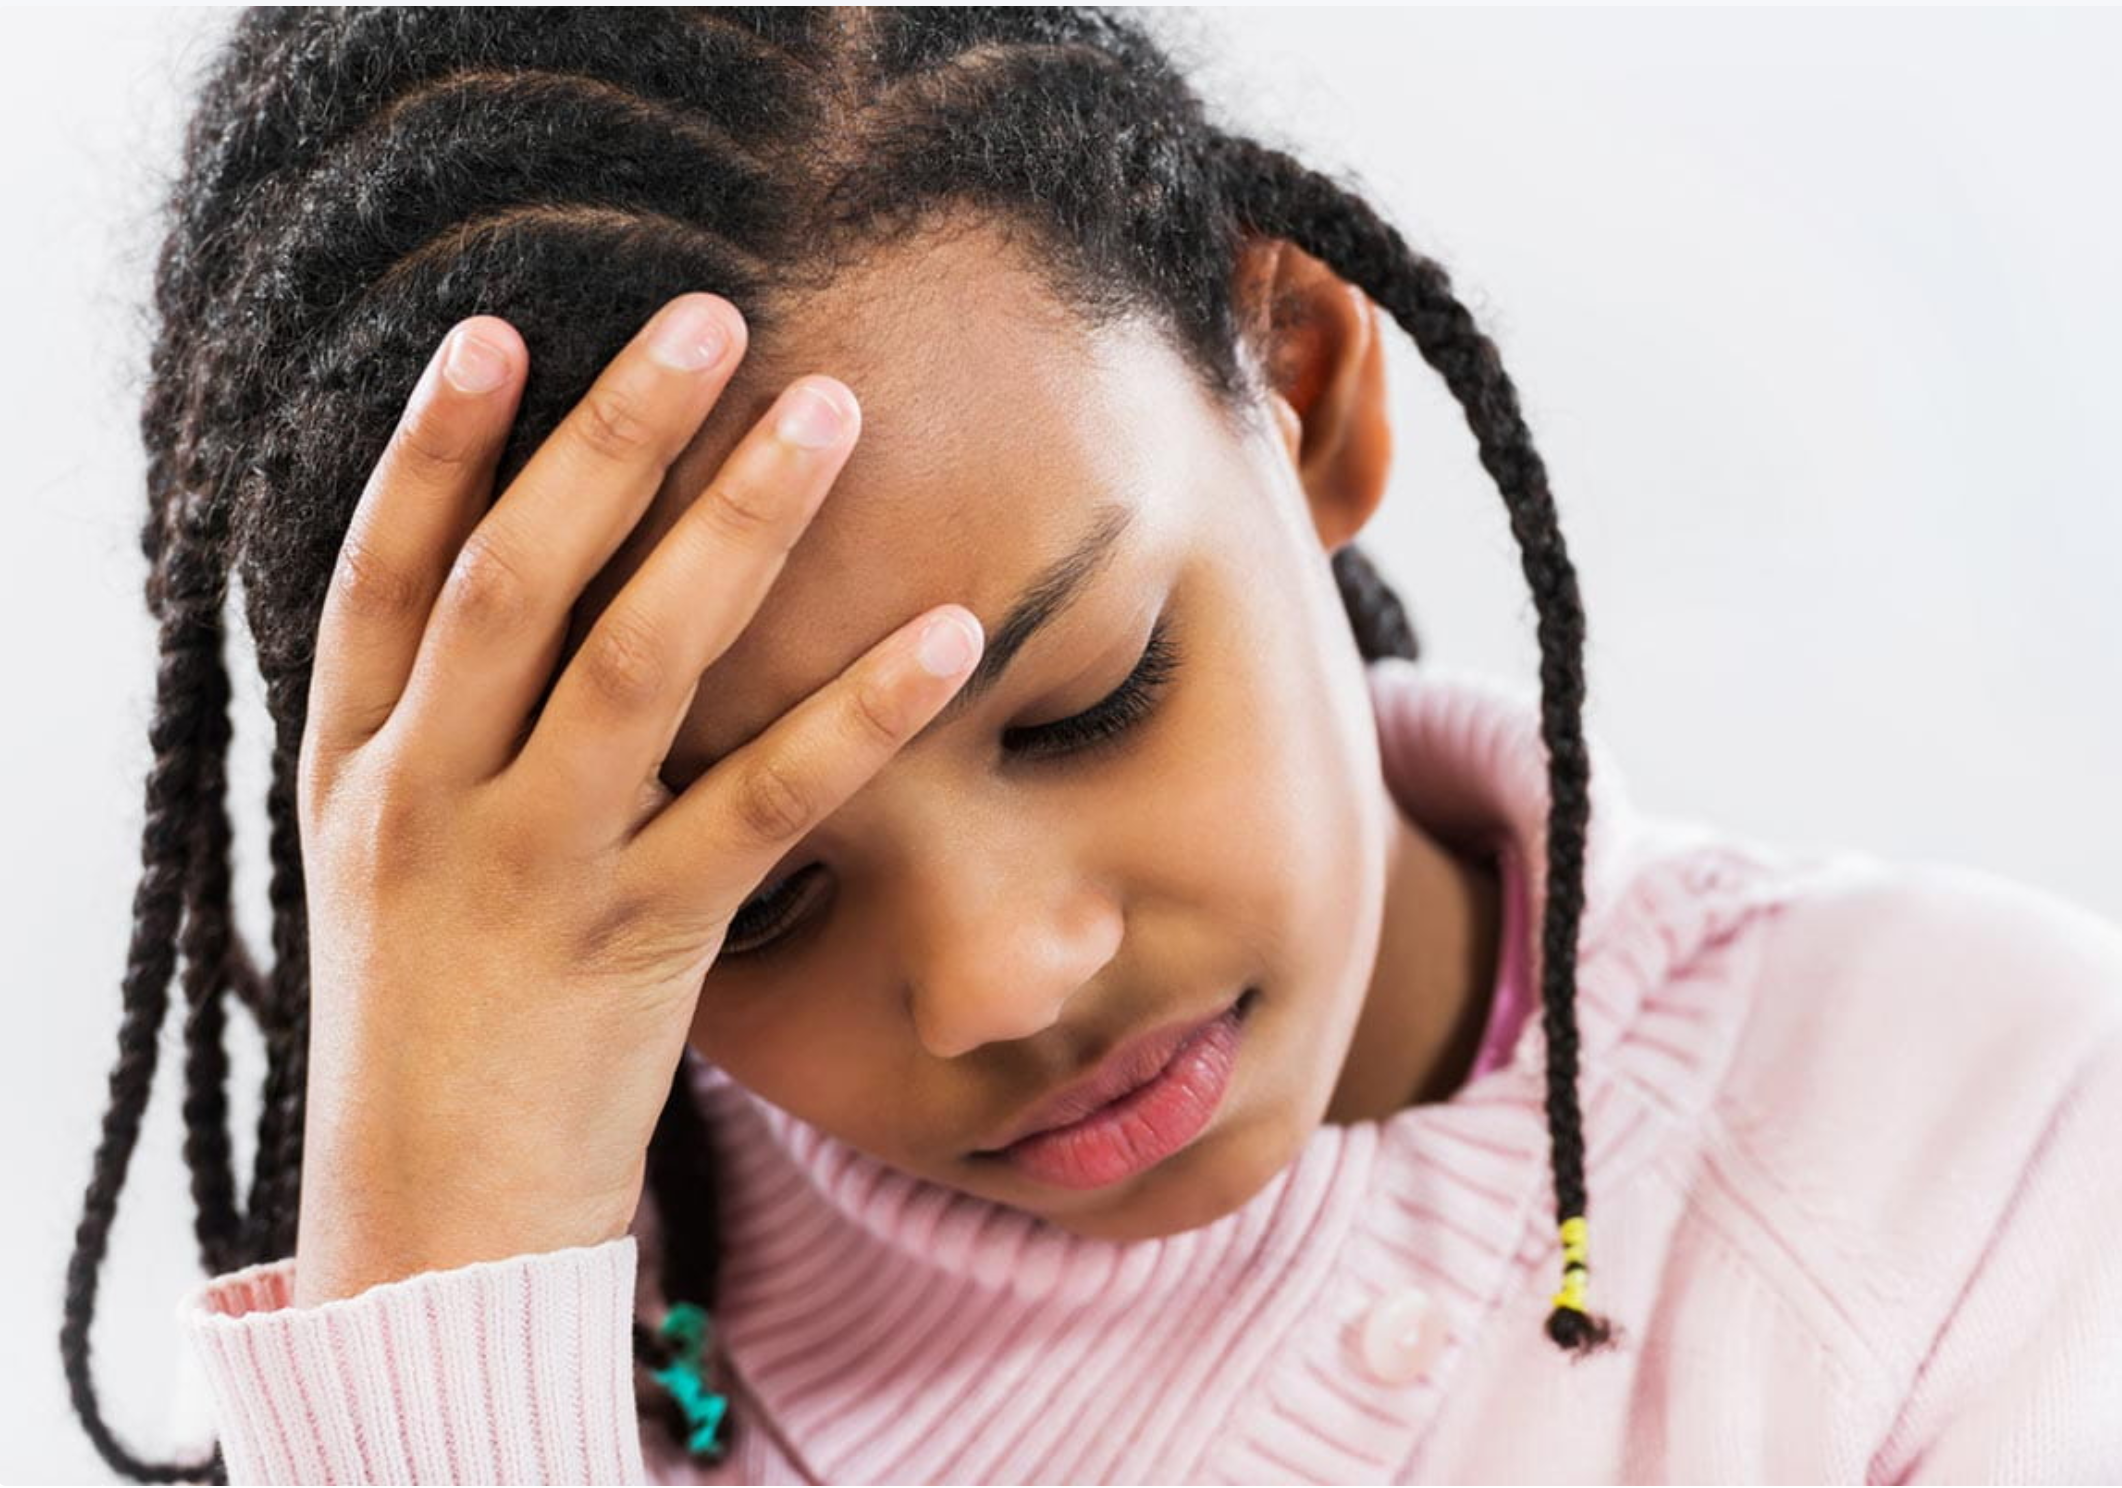 Kids Headaches: When Should I Worry?